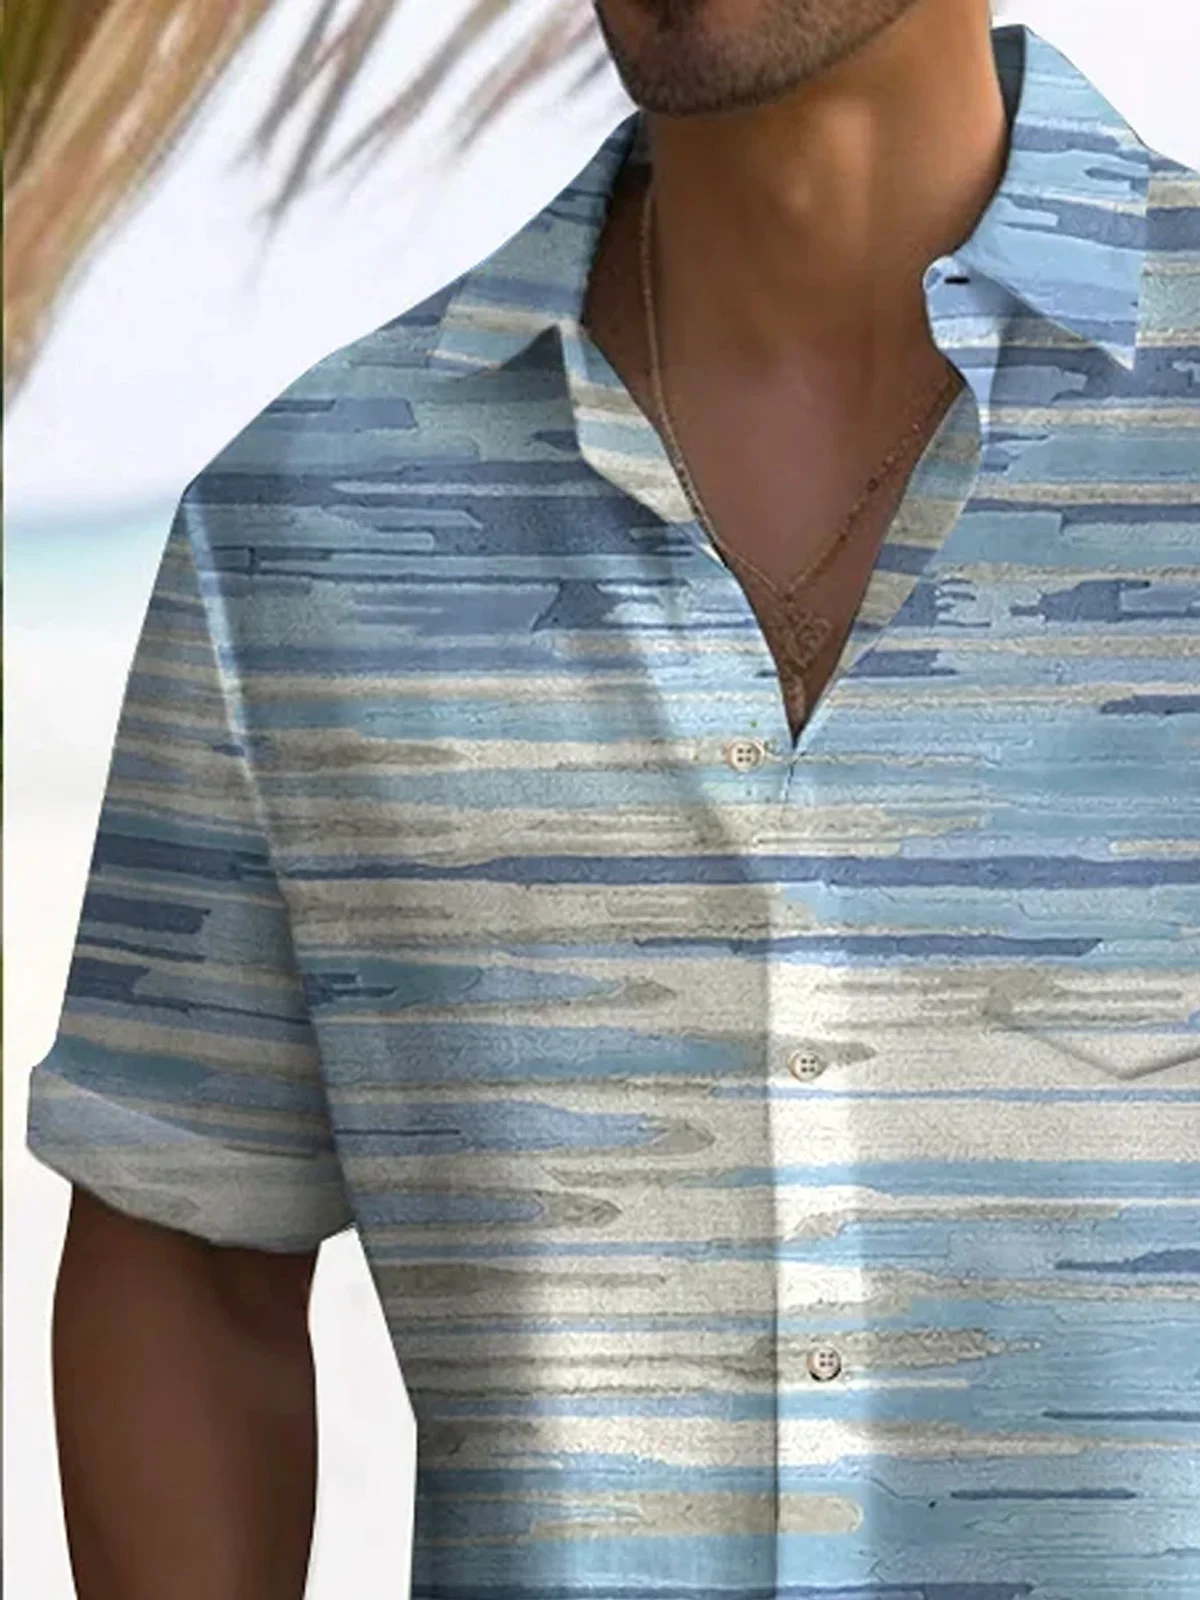 Royaura®  50's Vintage Art Textured Light Blue Men's Hawaiian Shirt Camp Pocket Stretch Shirt Big Tall